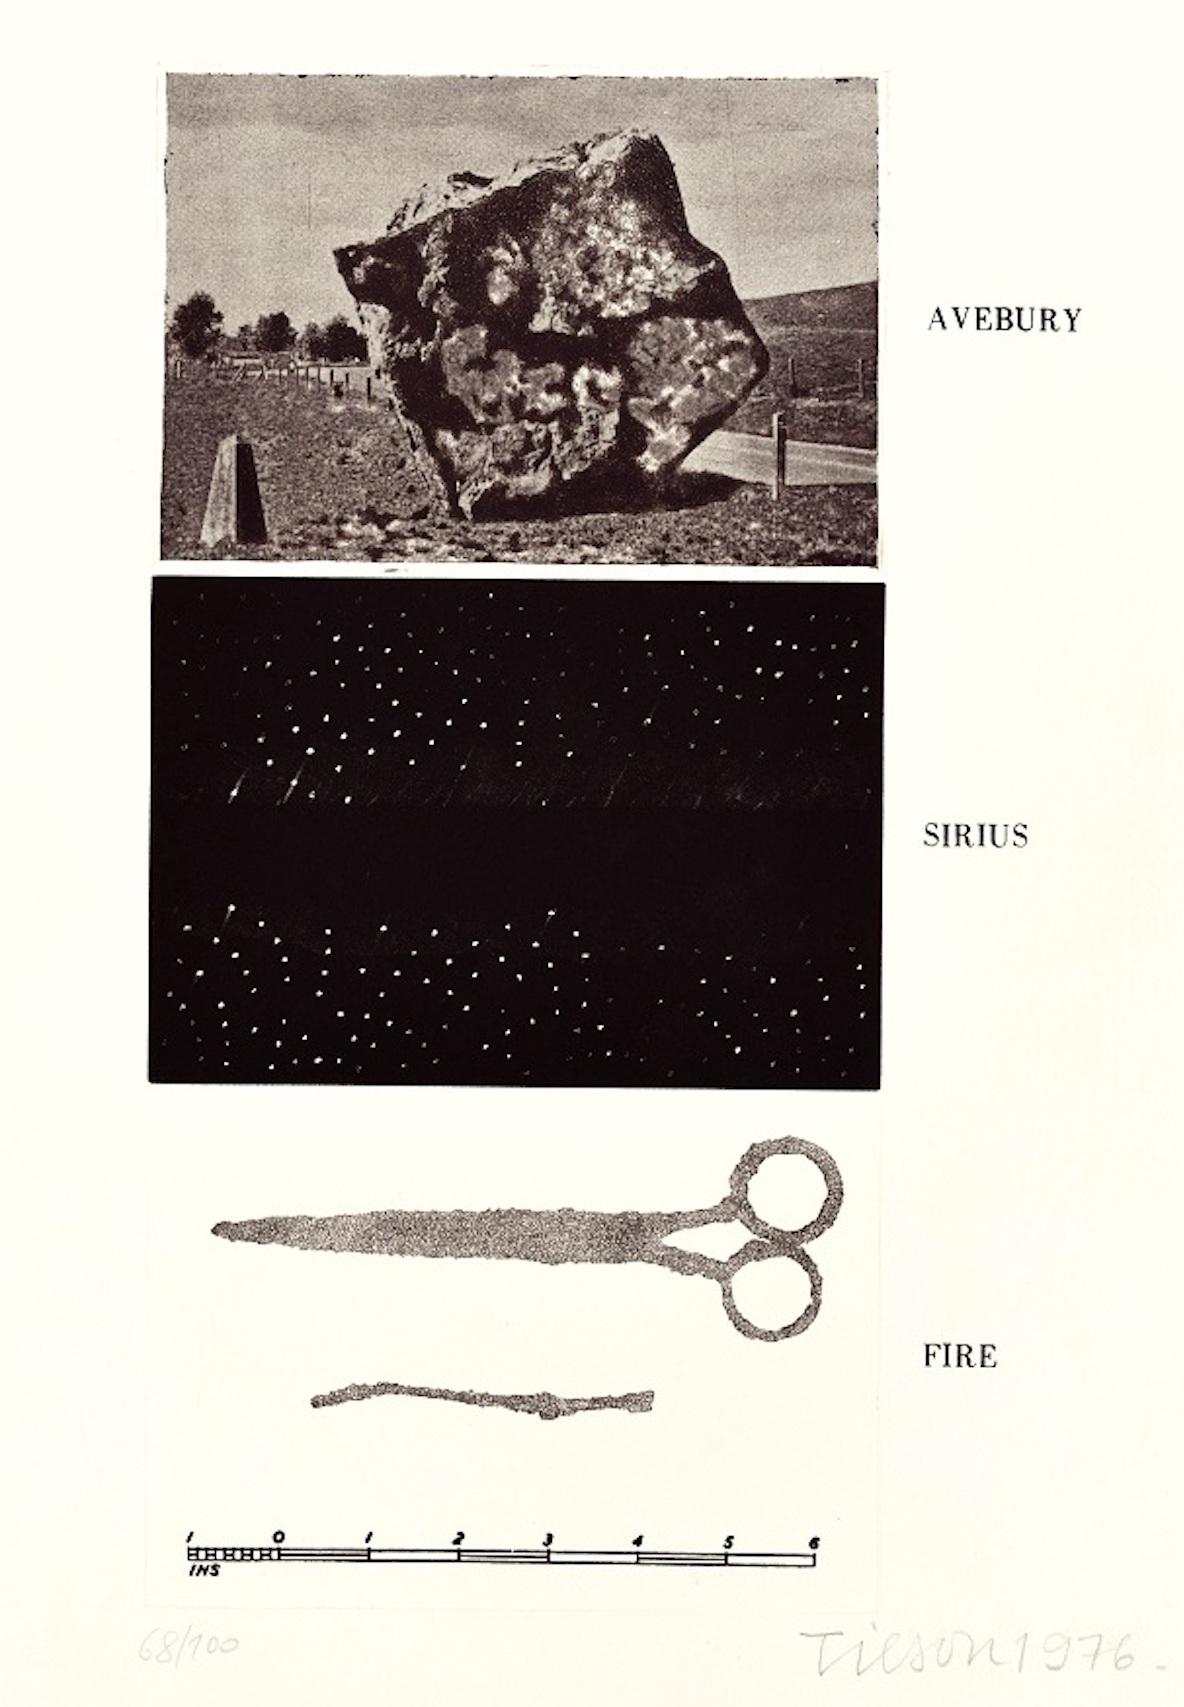 Avebury, Sirius, Fire - Original Erching by Joe Tilson - 1976 1